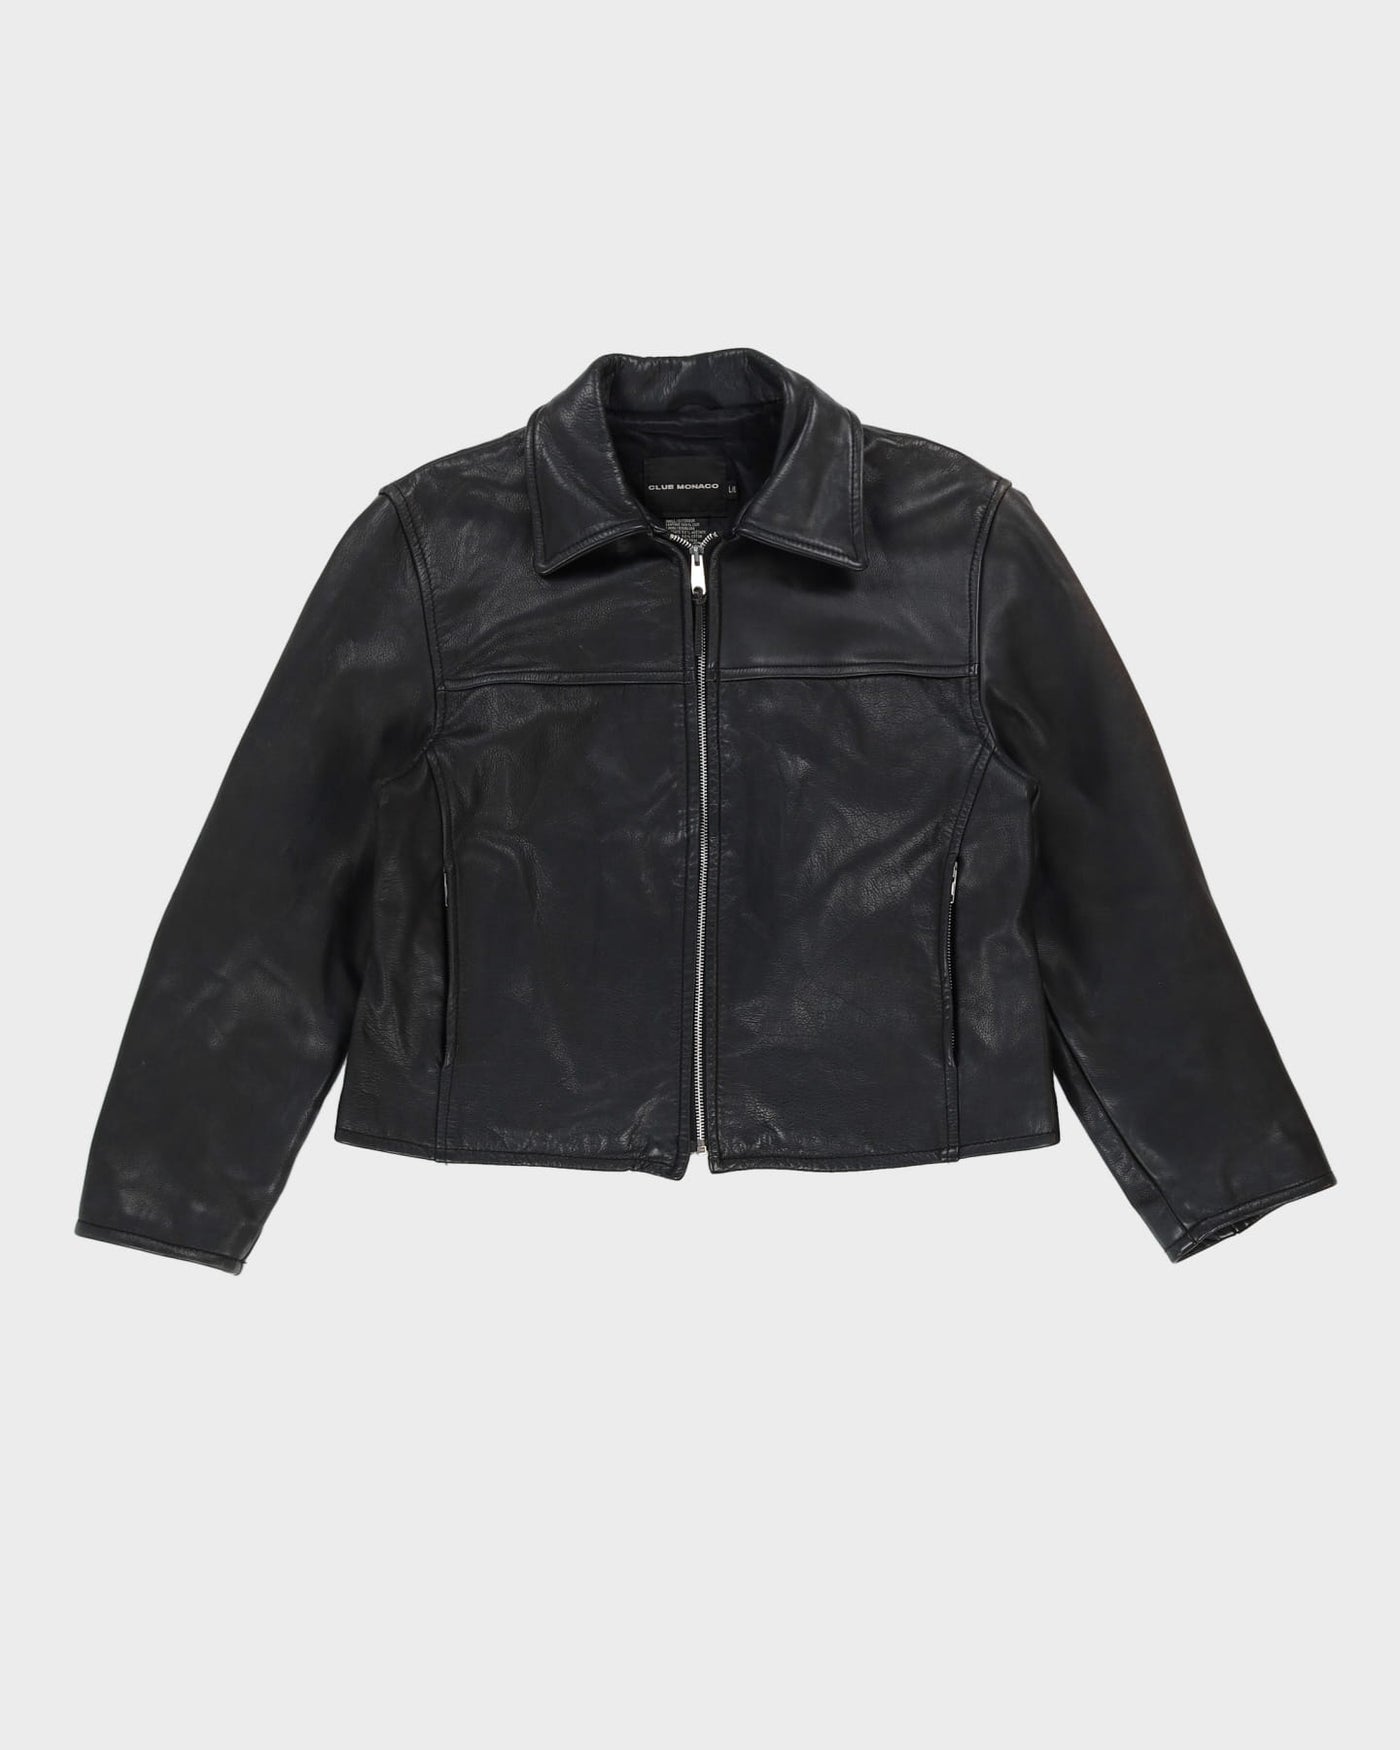 Club Monaco Black Leather Jacket - S